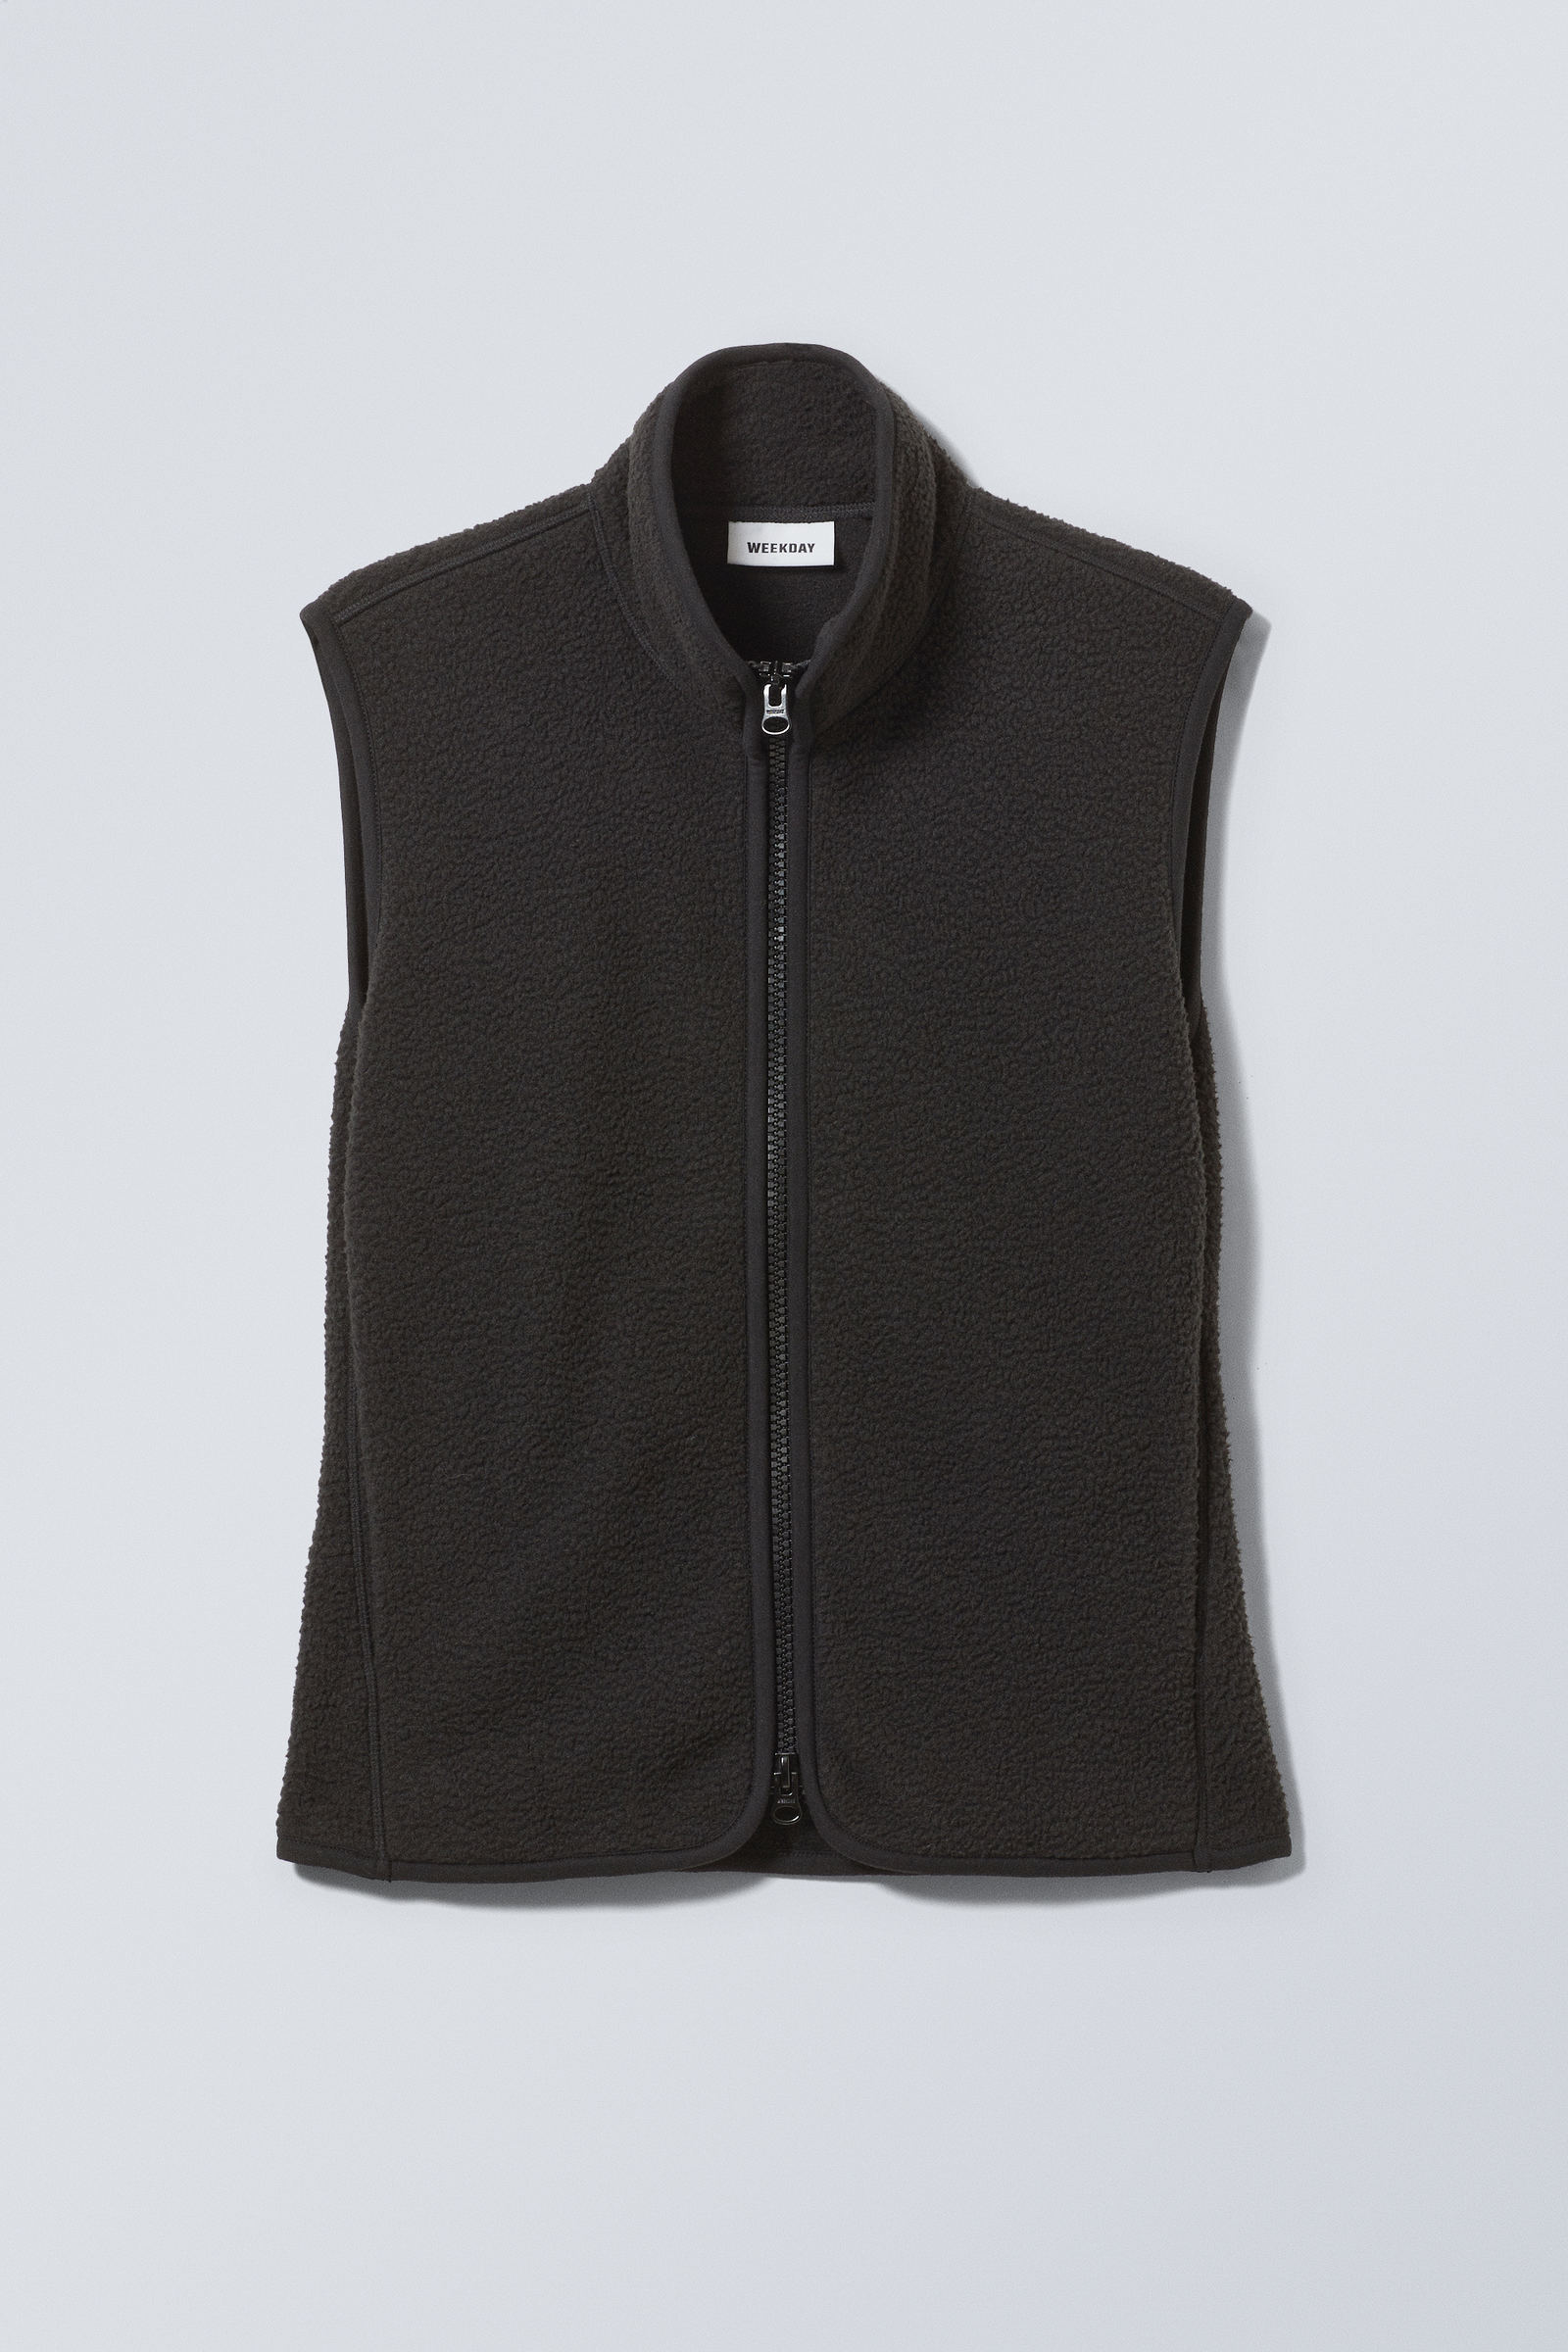 Black - Any Fleece Vest - 3